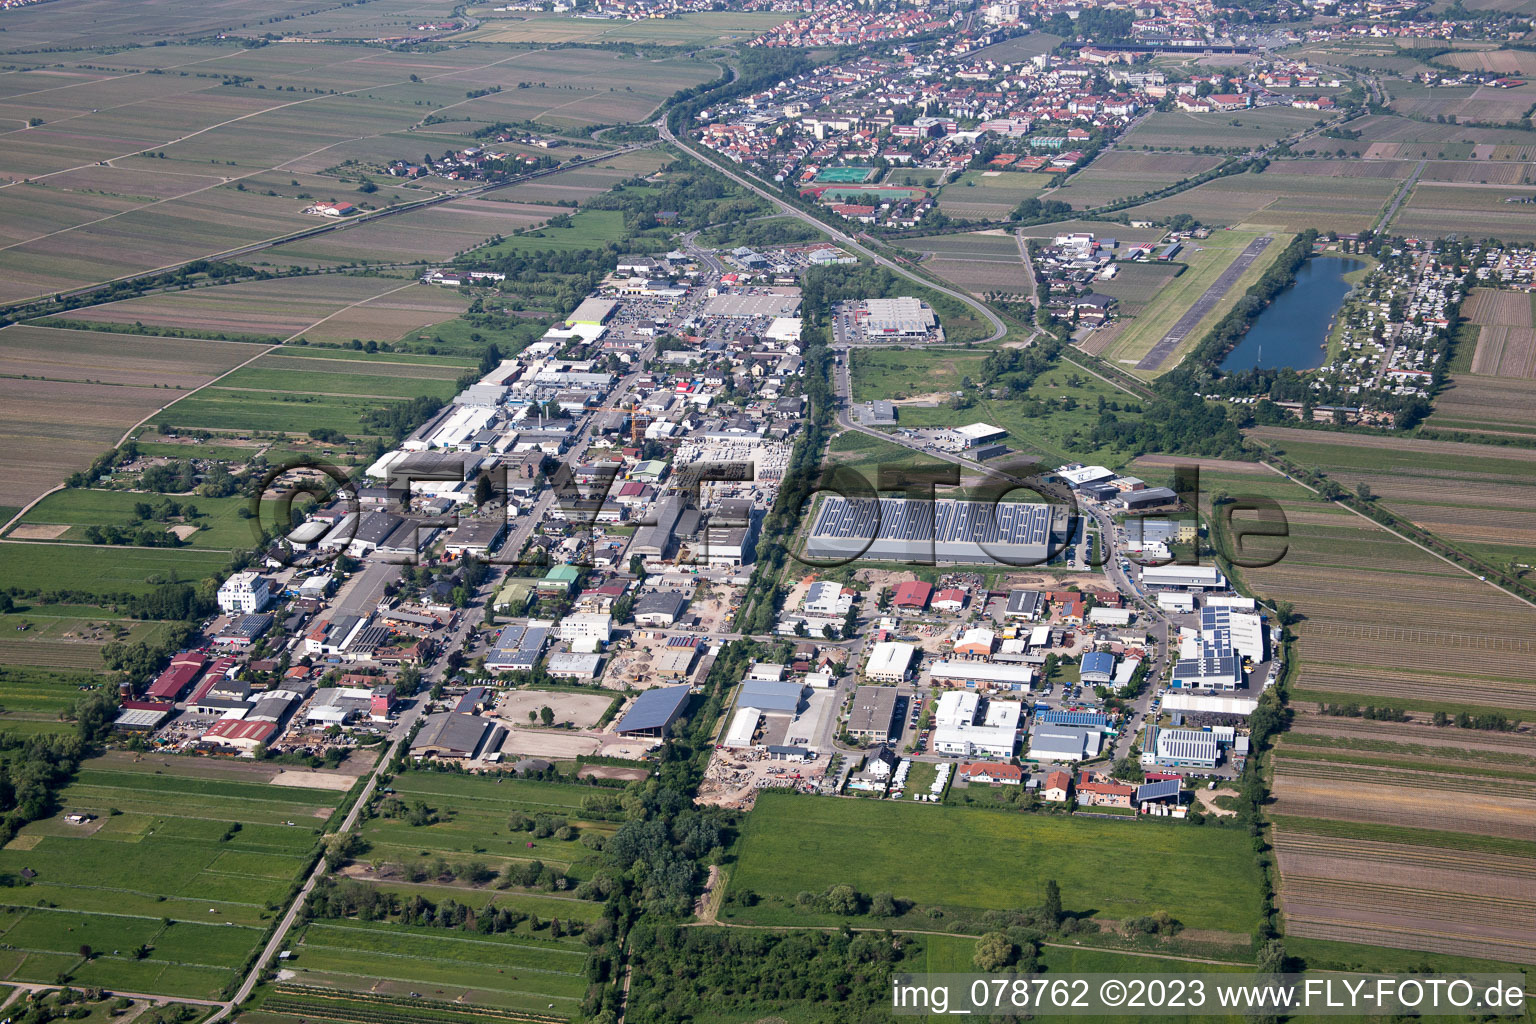 Industrial area Bruchstr in Bad Dürkheim in the state Rhineland-Palatinate, Germany